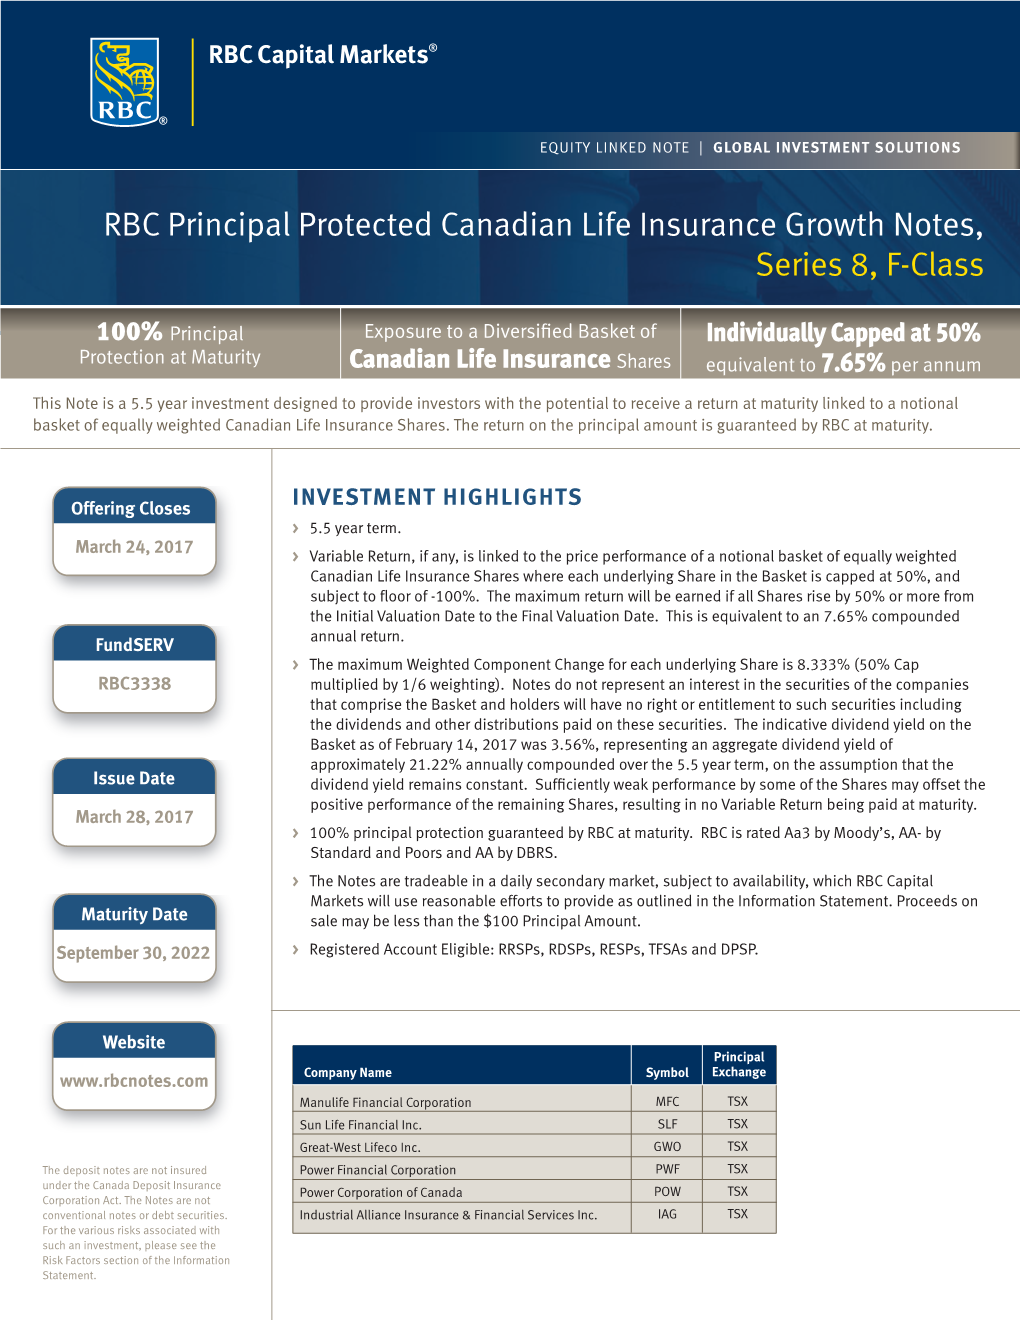 RBC Principal Protected Canadian Life Insurance Growth Notes,Series